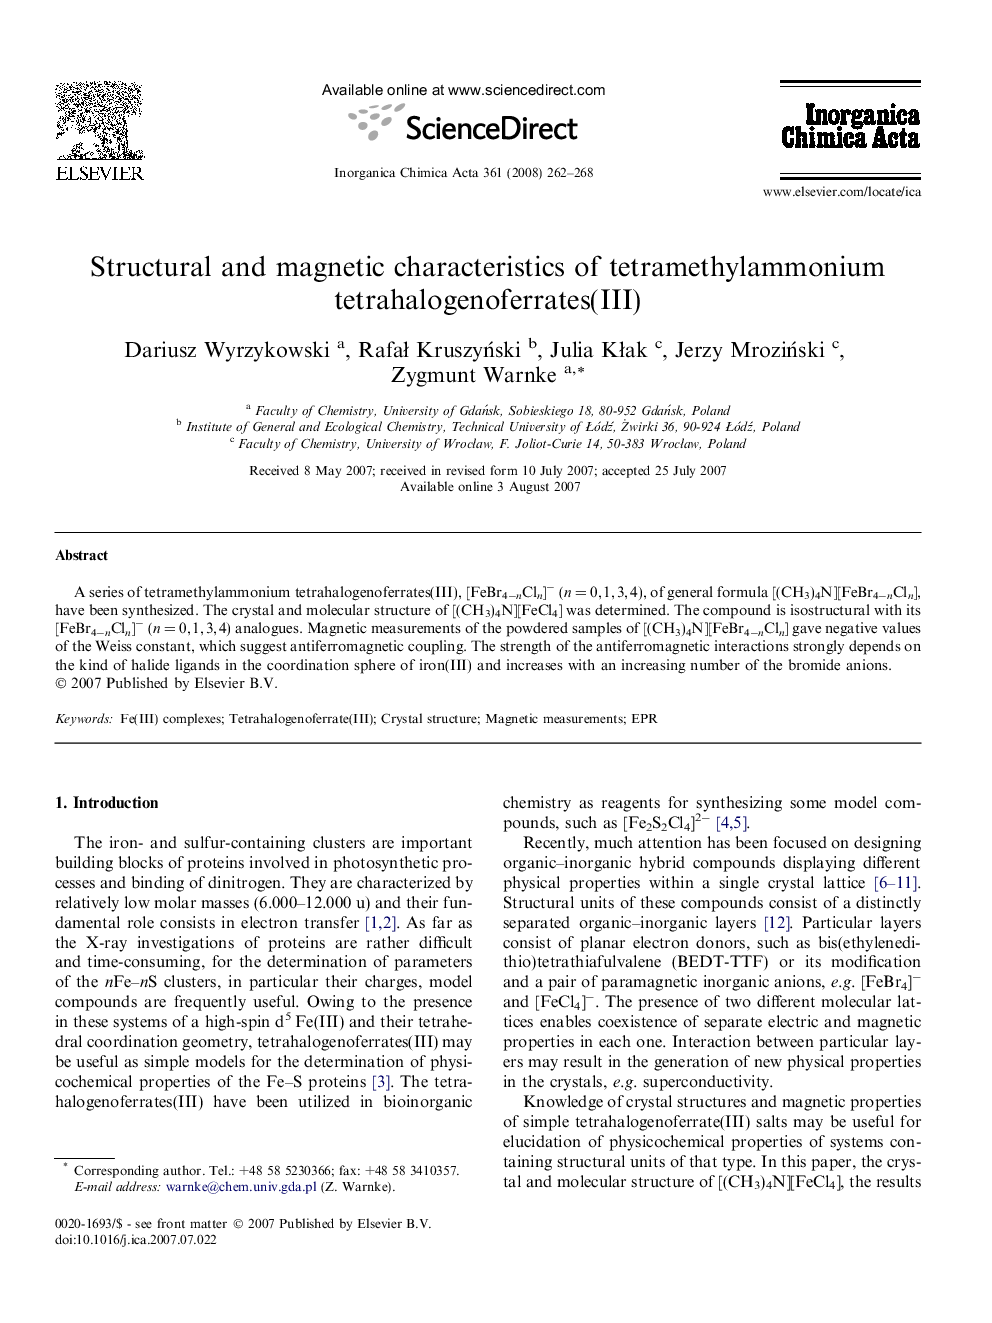 Structural and magnetic characteristics of tetramethylammonium tetrahalogenoferrates(III)